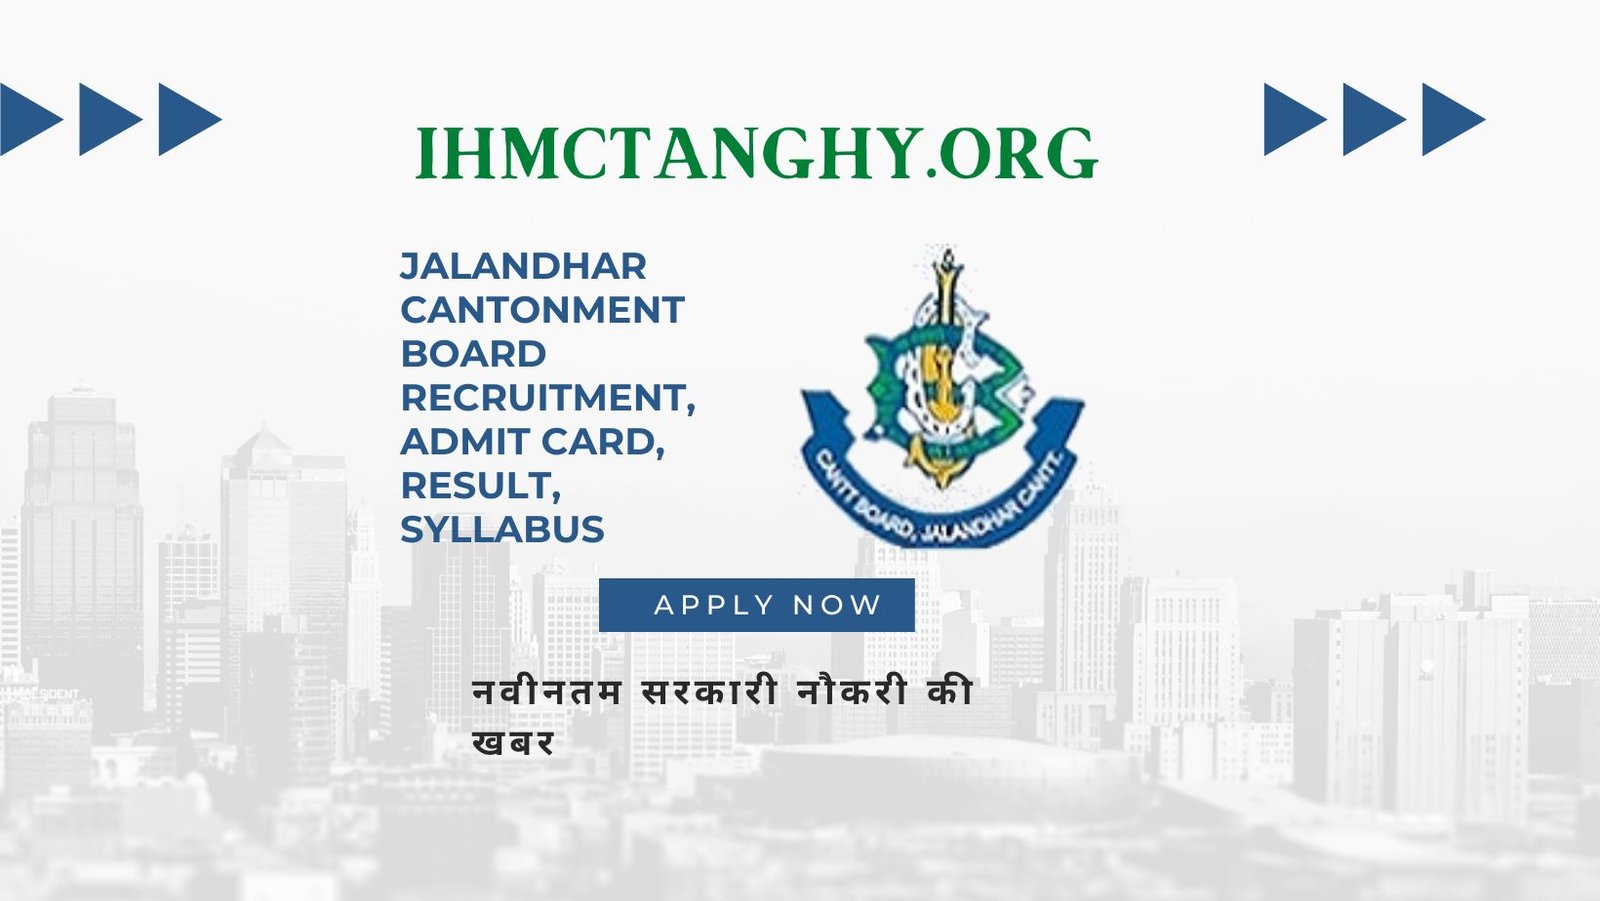 Jalandhar Cantonment Board Recruitment